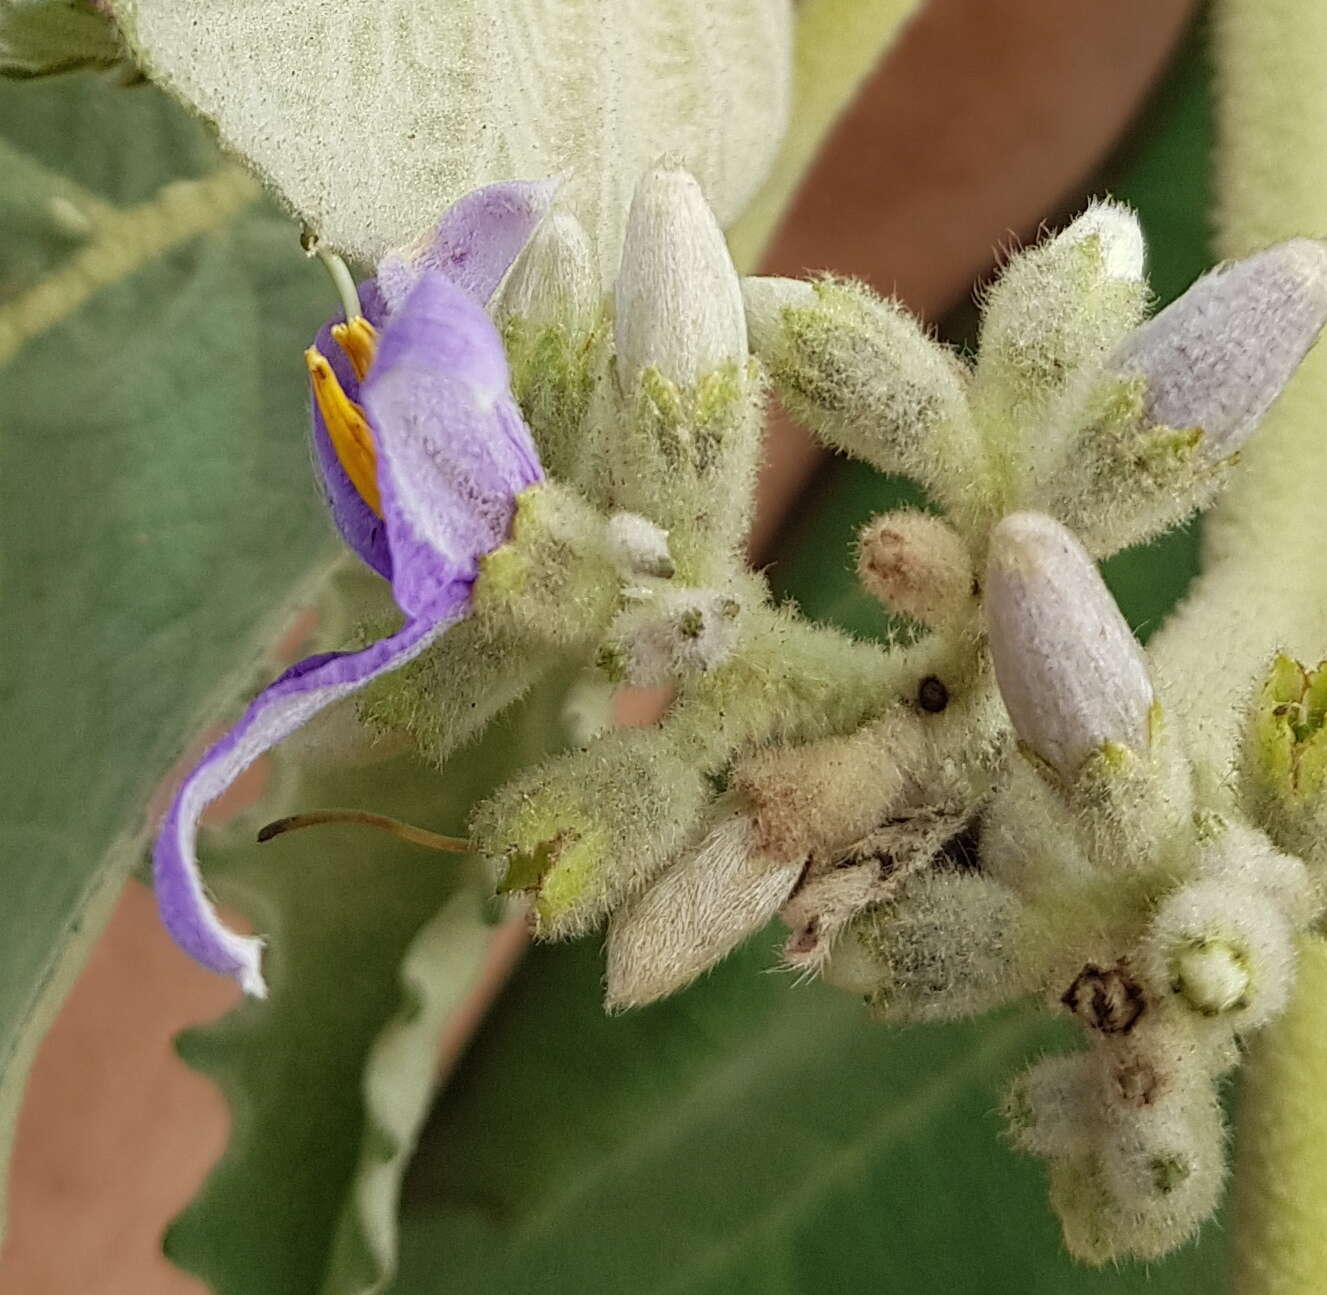 Image of Solanum mitlense Dun.